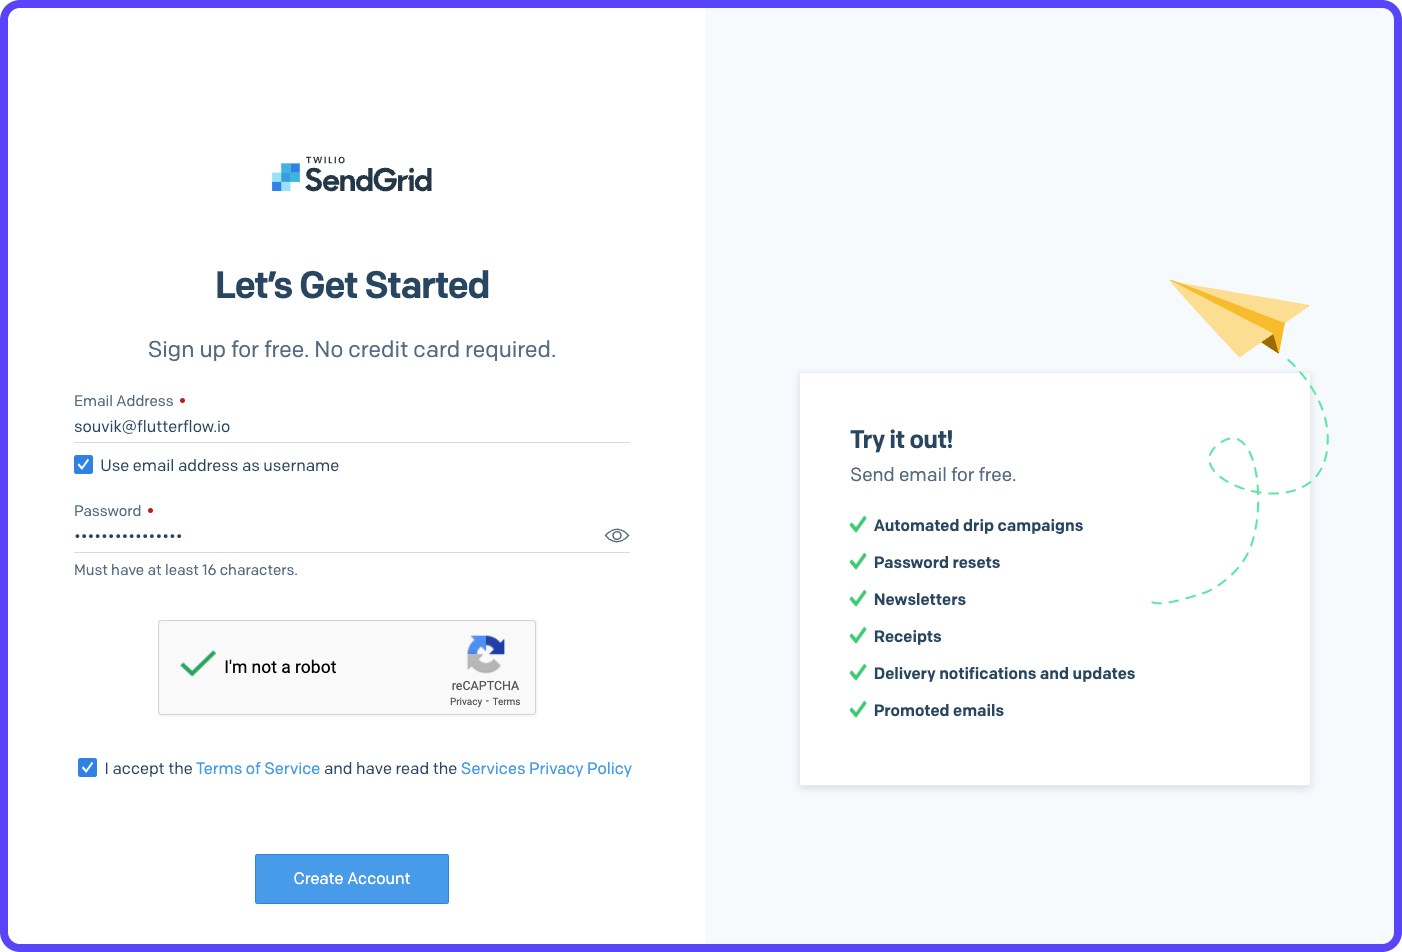 SendGrid create account page